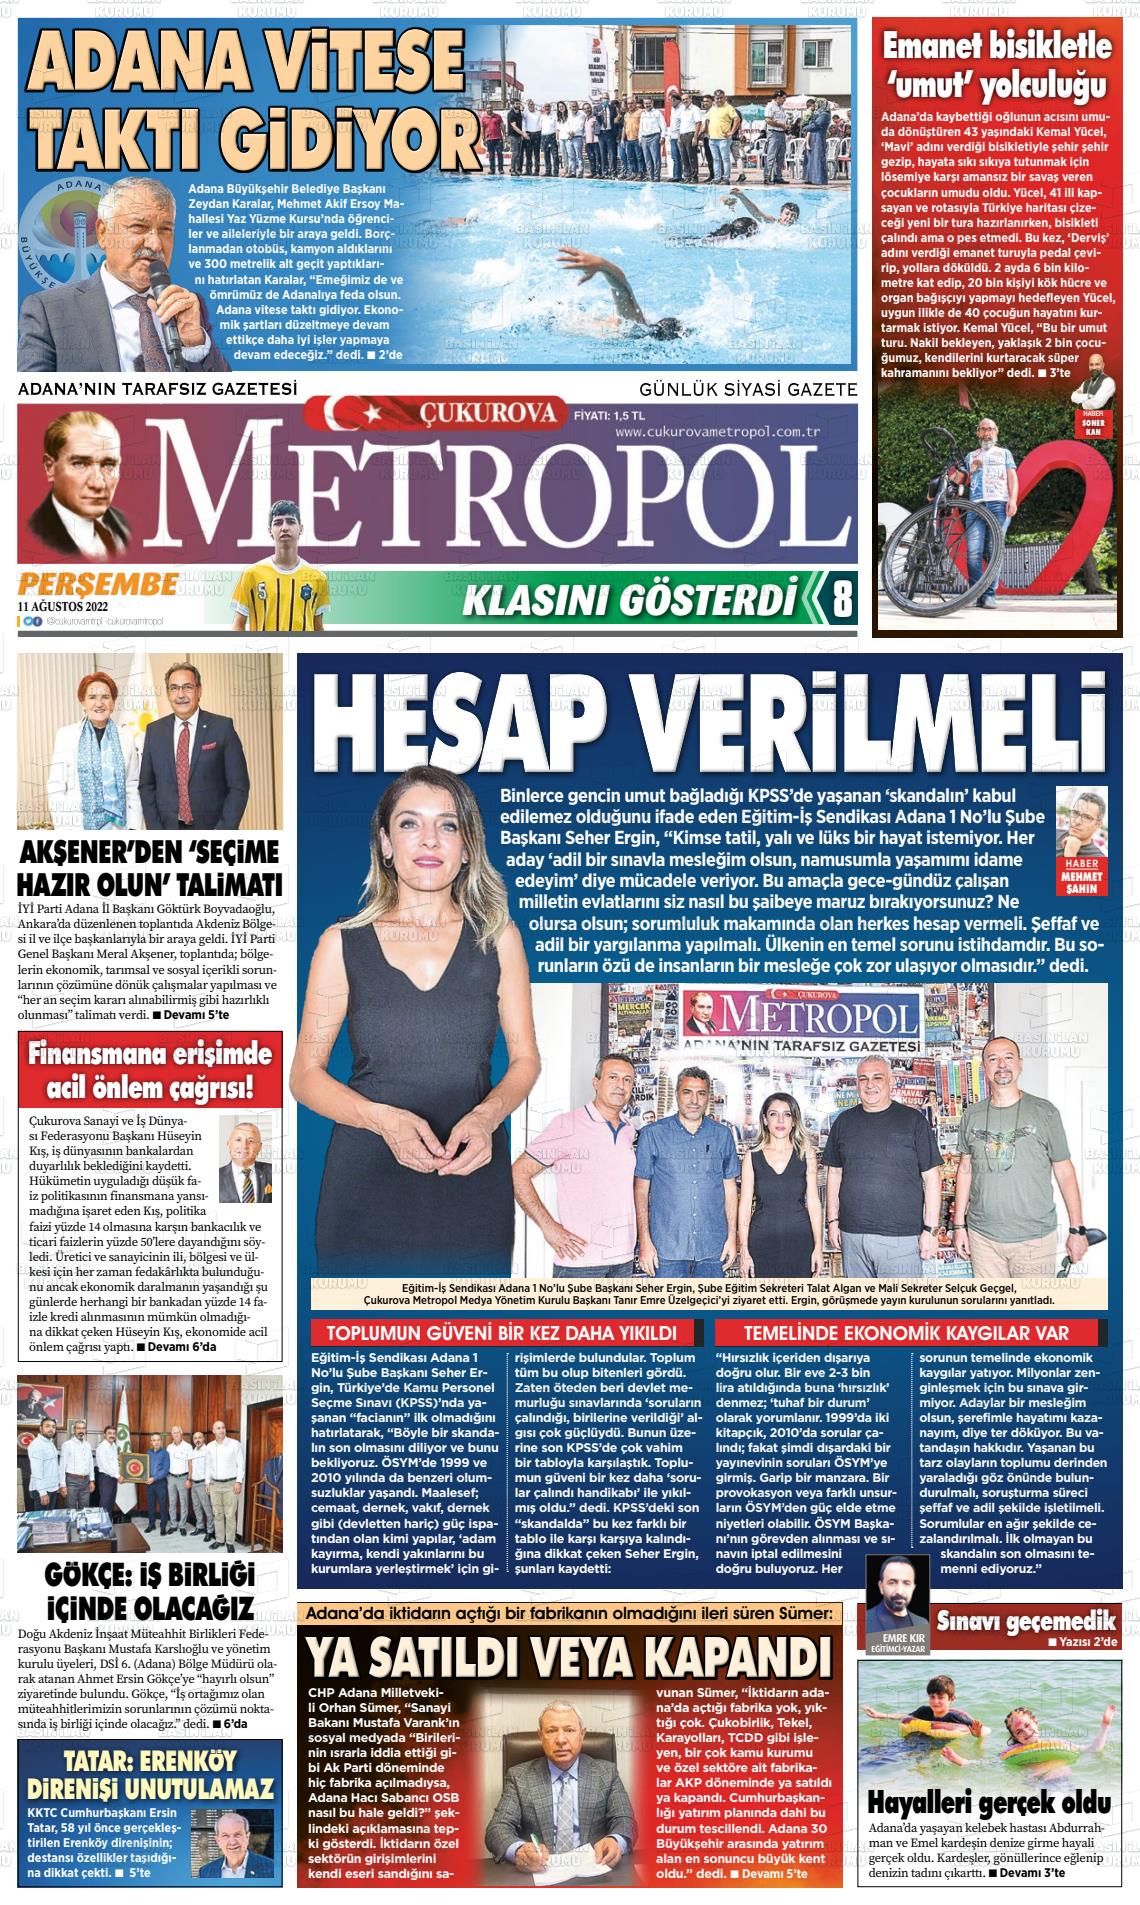 11 Ağustos 2022 Çukurova Metropol Gazete Manşeti